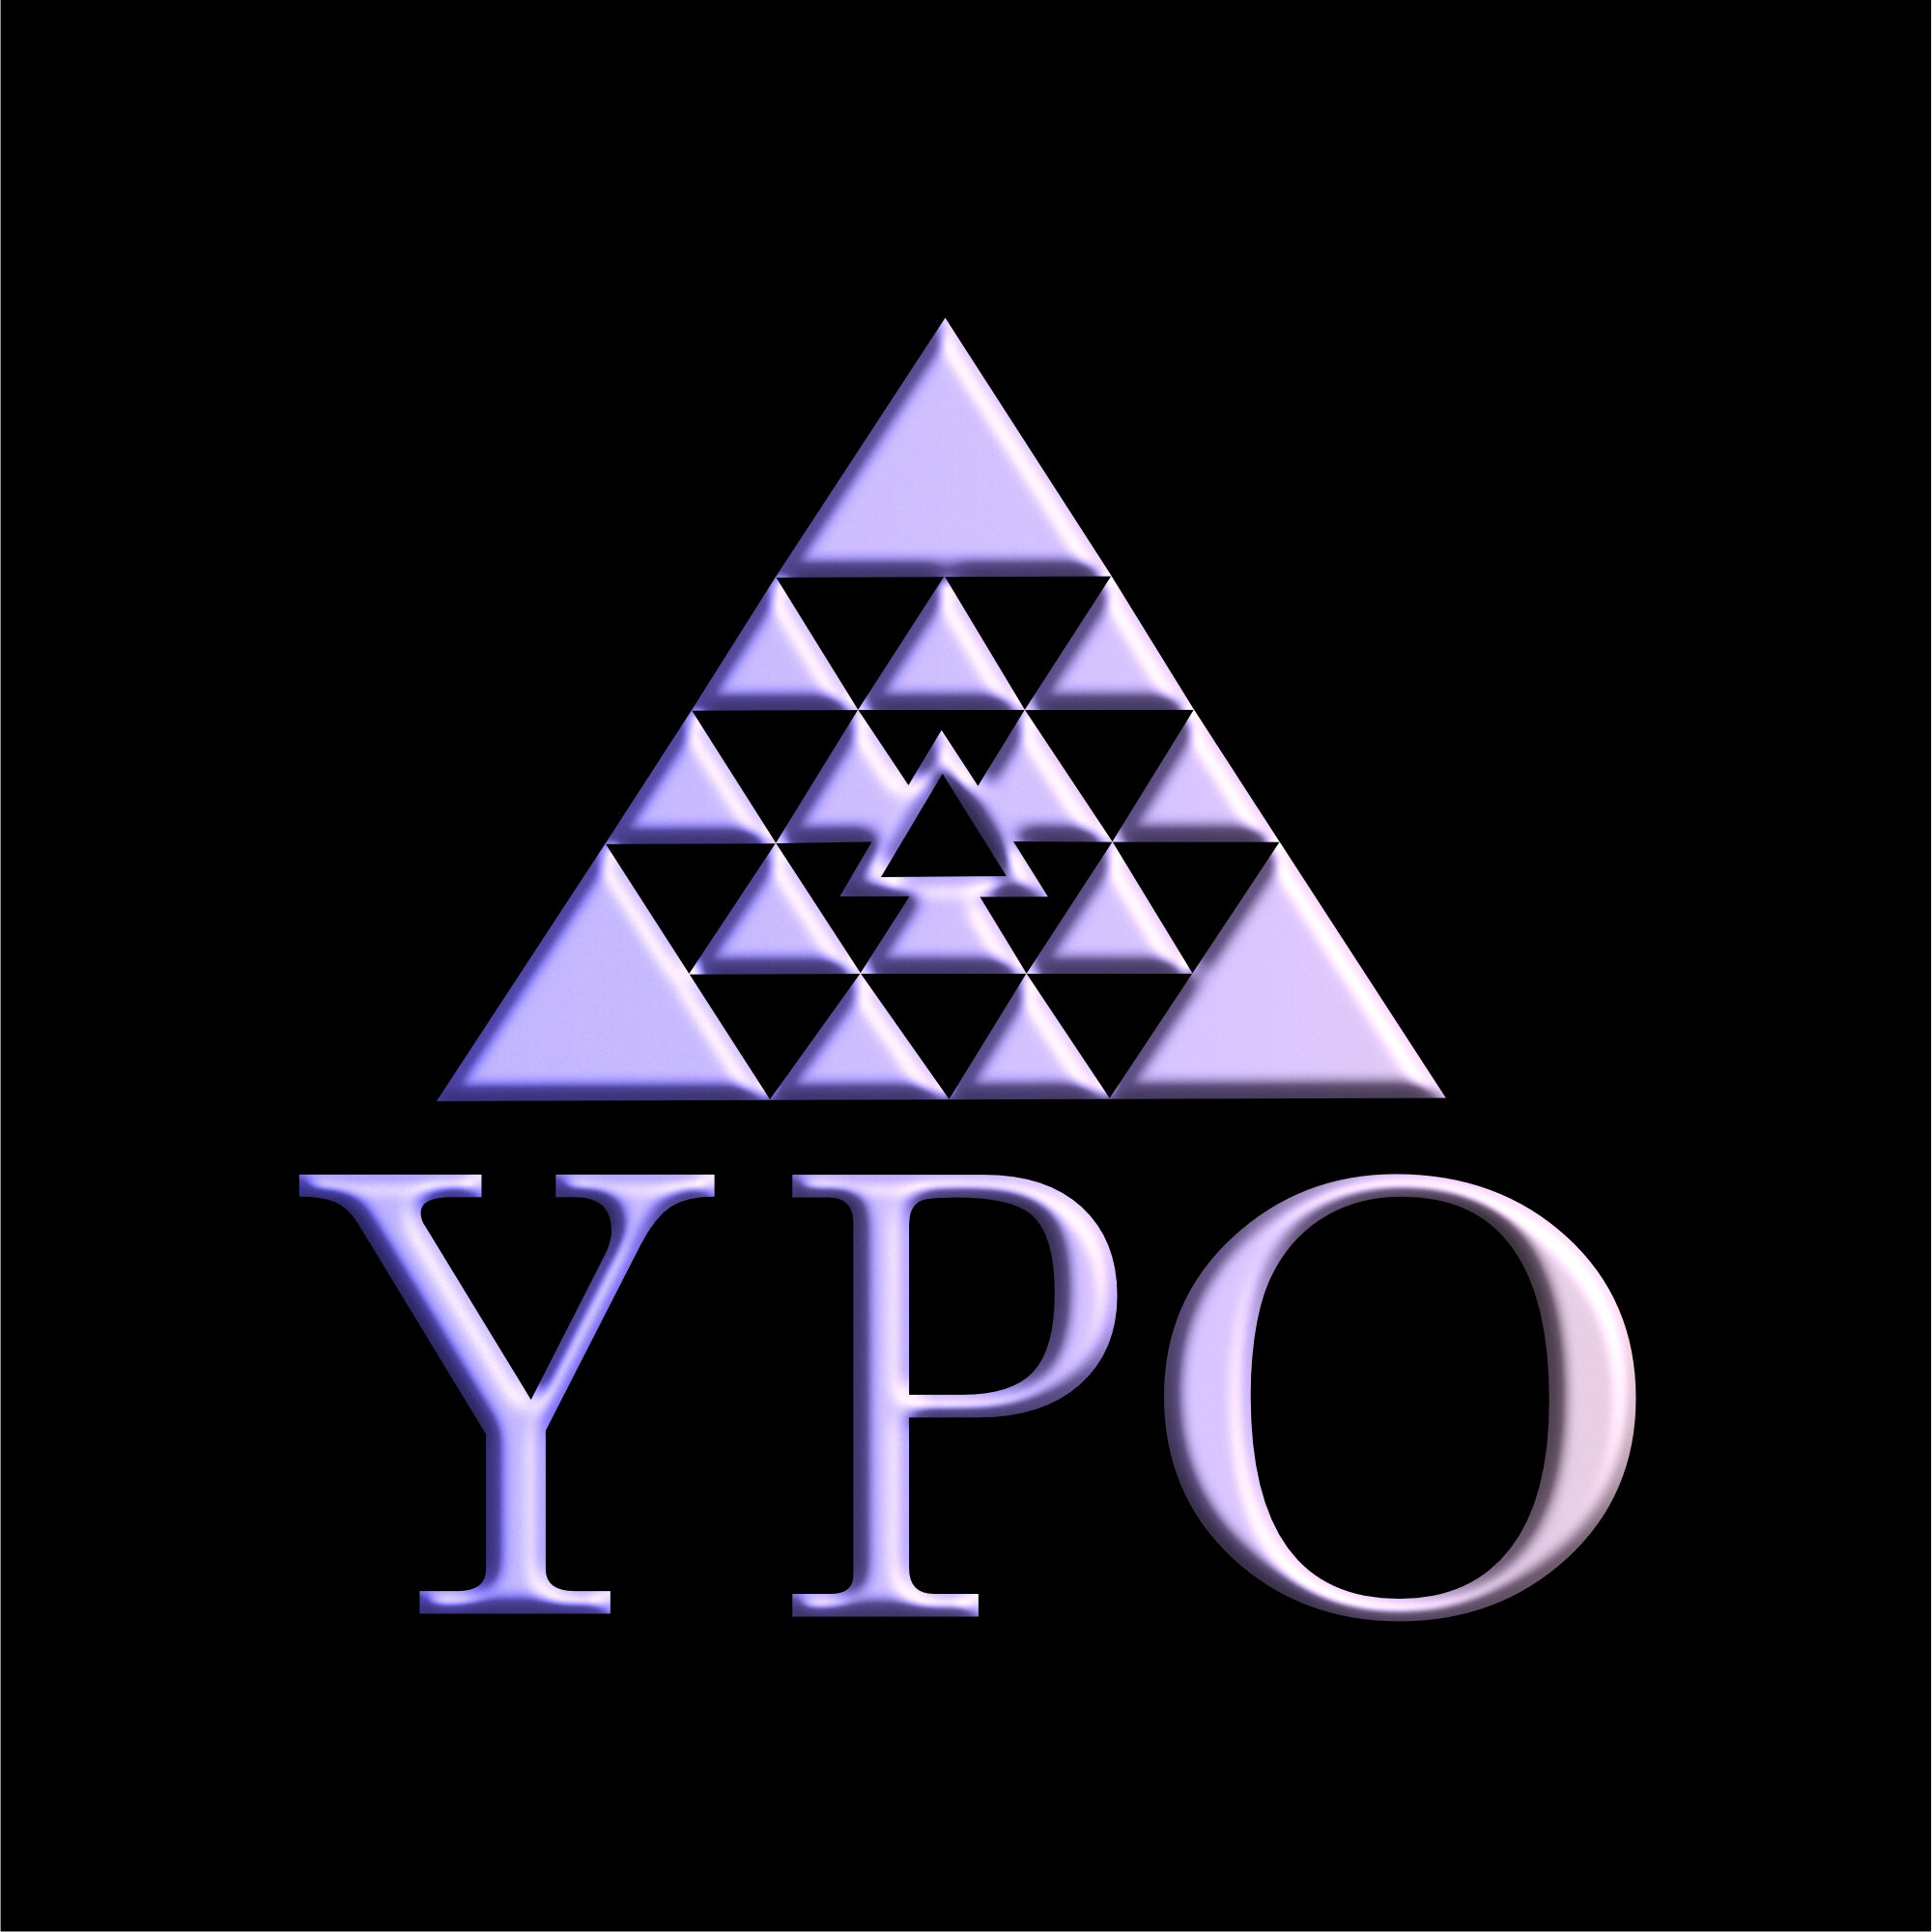 BLACK YPO 3D EFFECT.jpg